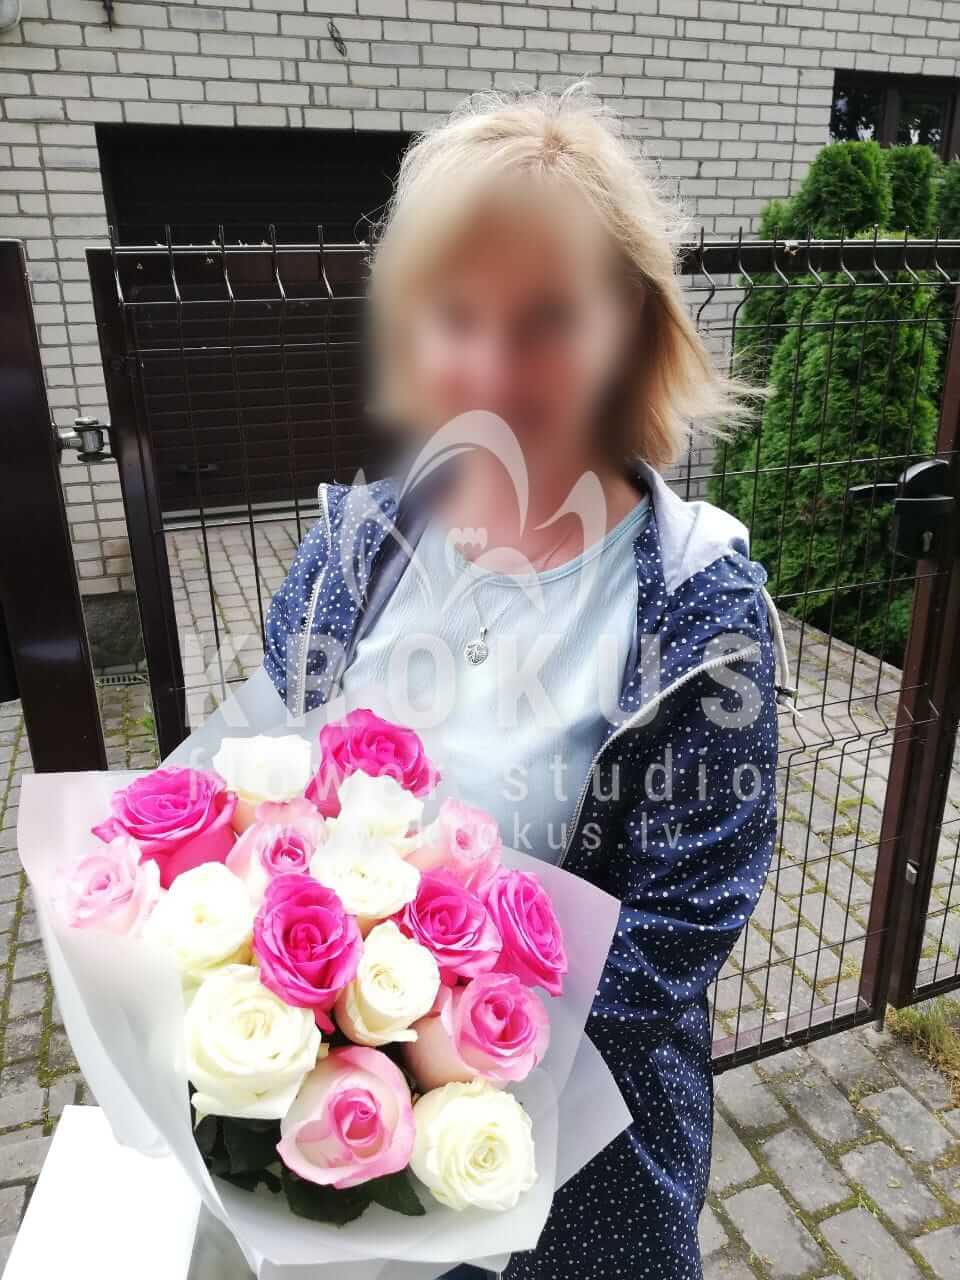 Deliver flowers to Ogre (pink roseswhite rosesorange rosesyellow rosesred roses)